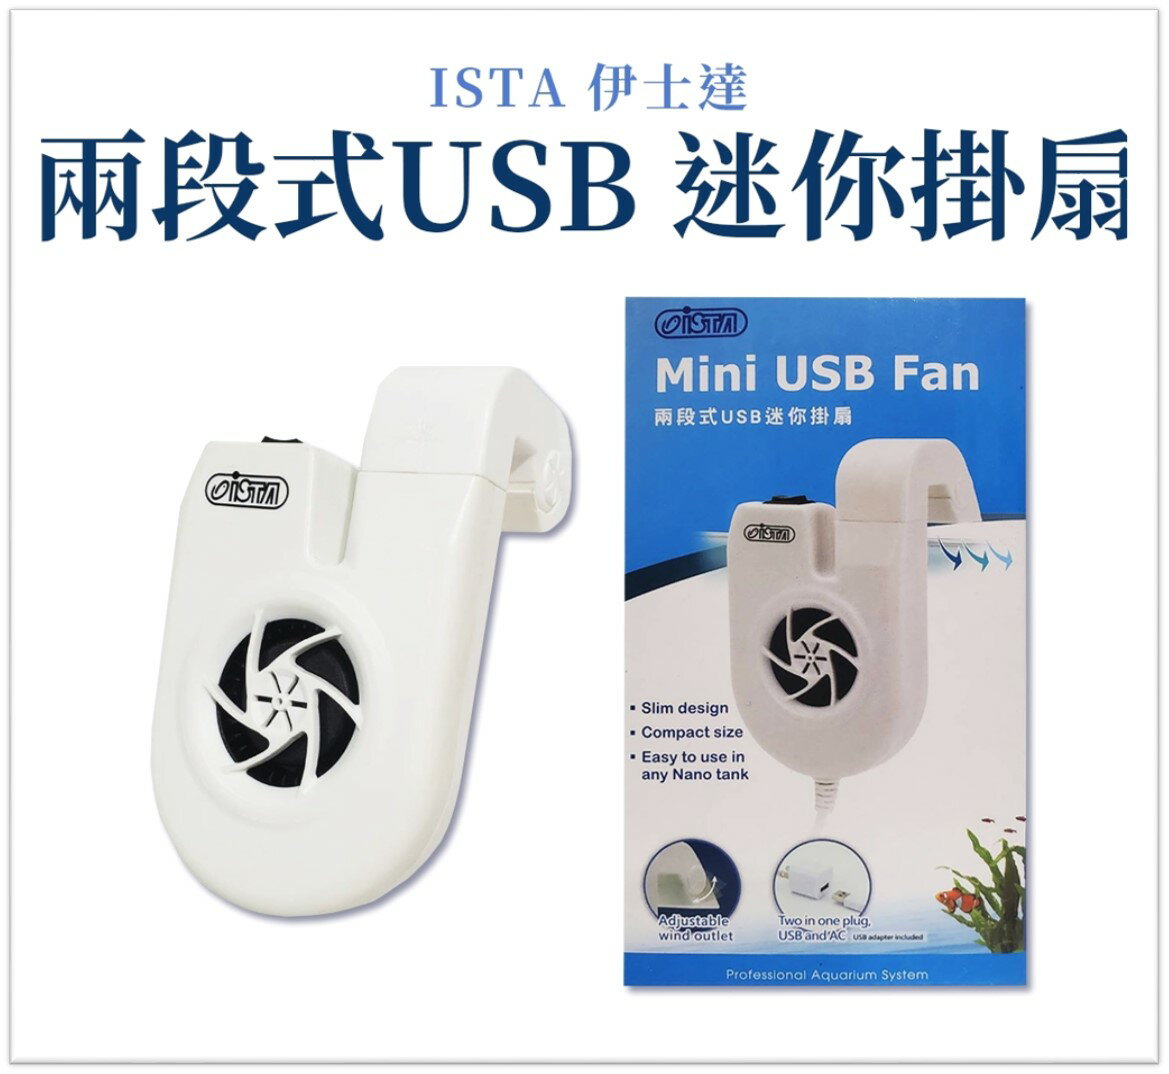 ISTA 伊士達 兩段式 USB 迷你強力掛扇(I-534) 魚缸降溫 冷卻 迷你風扇